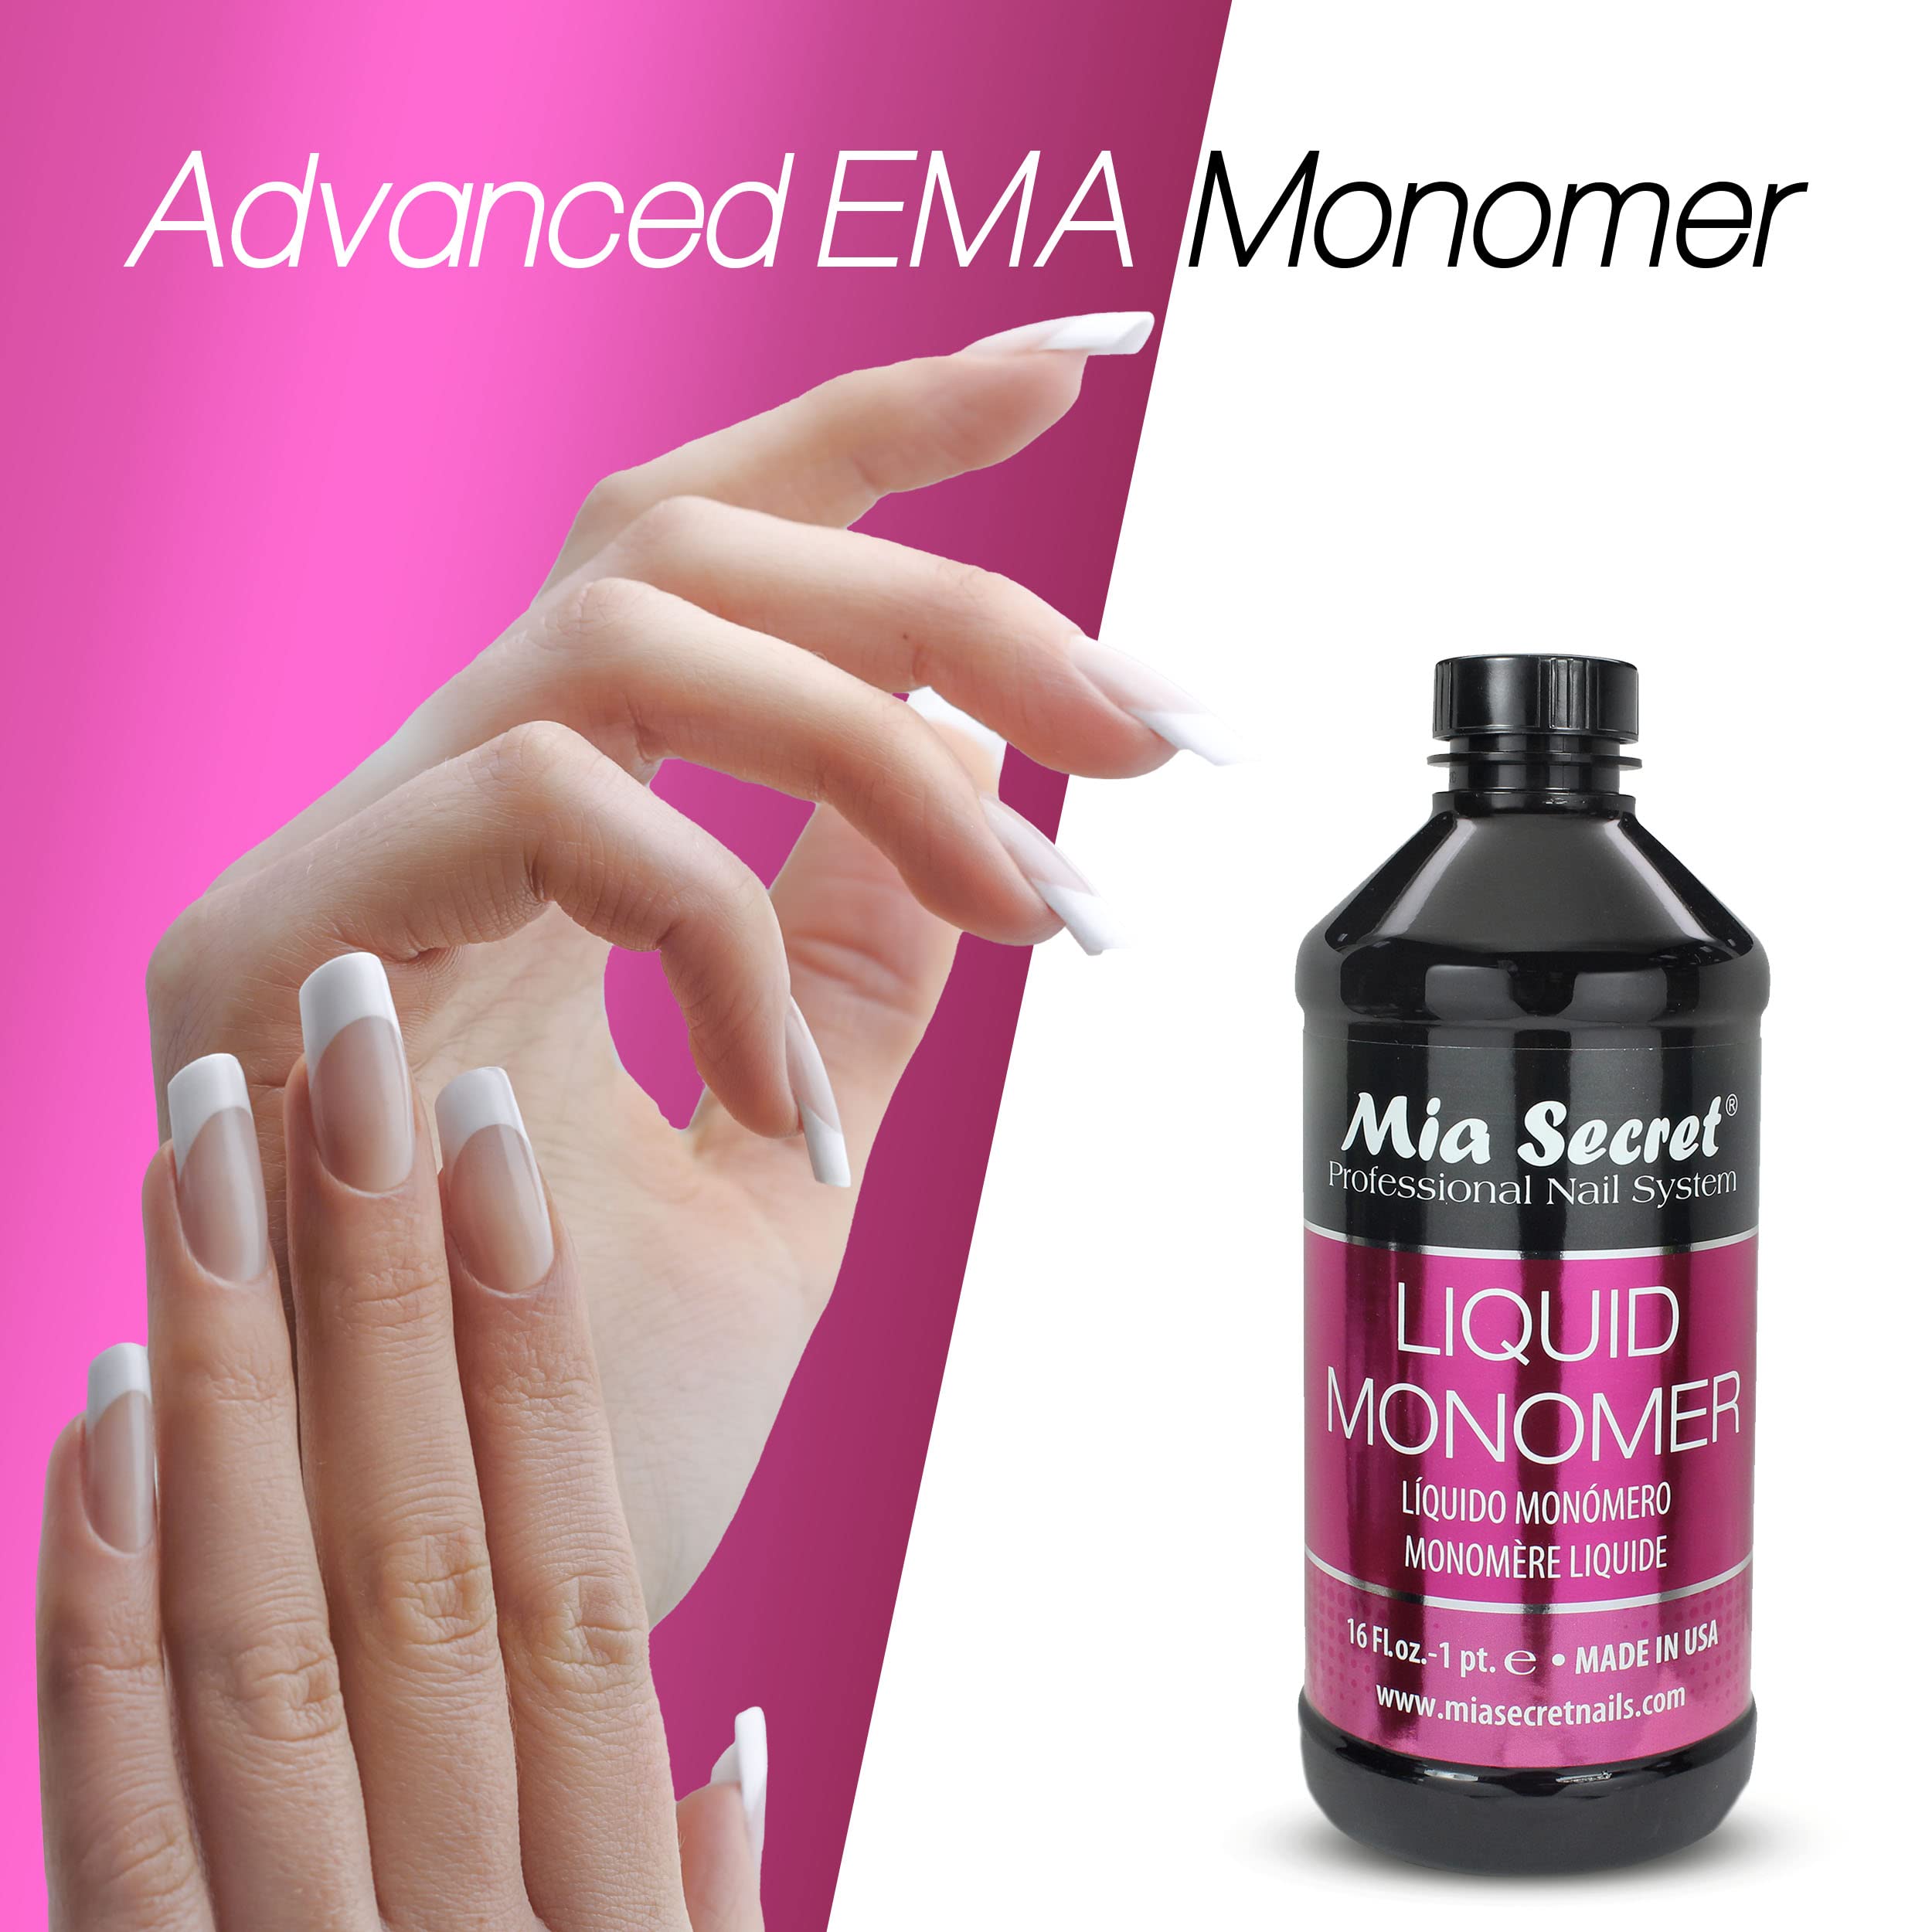 Mia Secret 16 oz Liquid Monomer - Professional Acrylic Nail Liquid for Acrylic Powder - EMA monomer - Nail Monomer Liquid - ema monomer Acrylic Nail Liquid